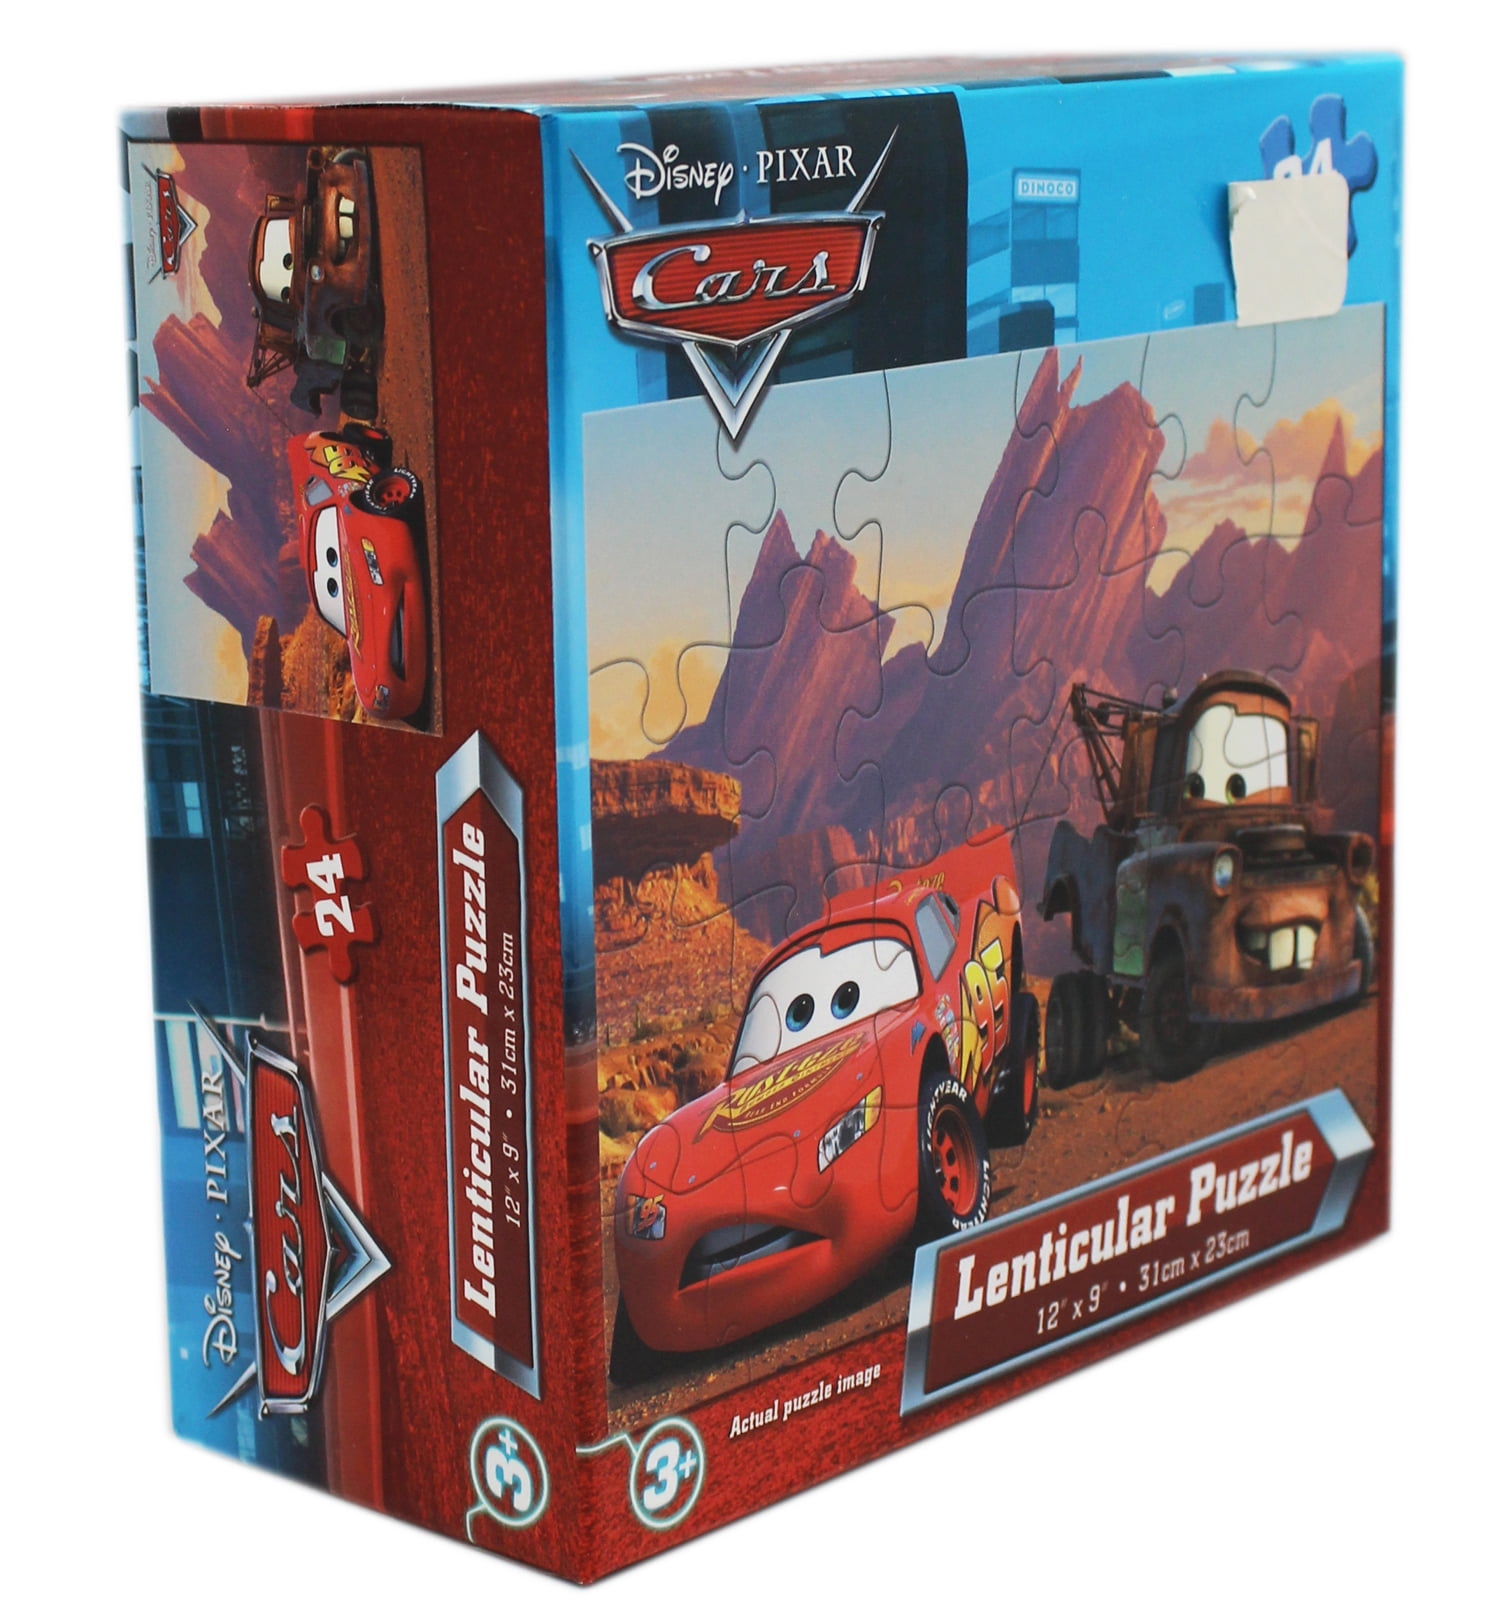 Disney Pixar Cars 3 Puzzle 24 piece Lightening Mcqueen kid Educational Gift NEW